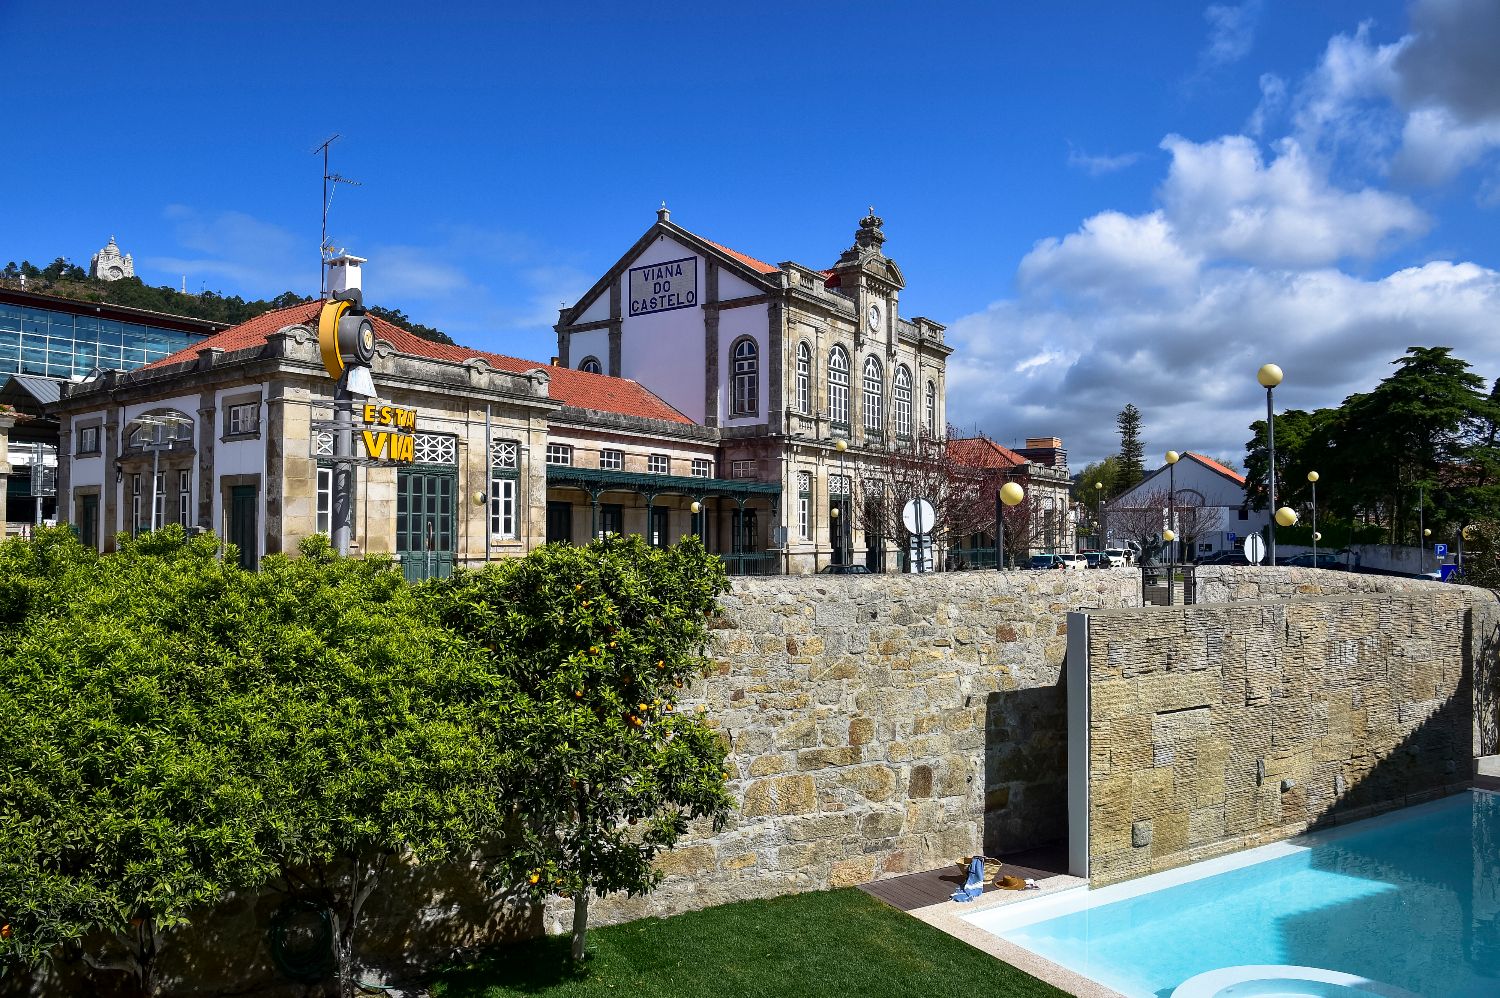 Casa Melo Alvim 'Best Portugal Hotels'